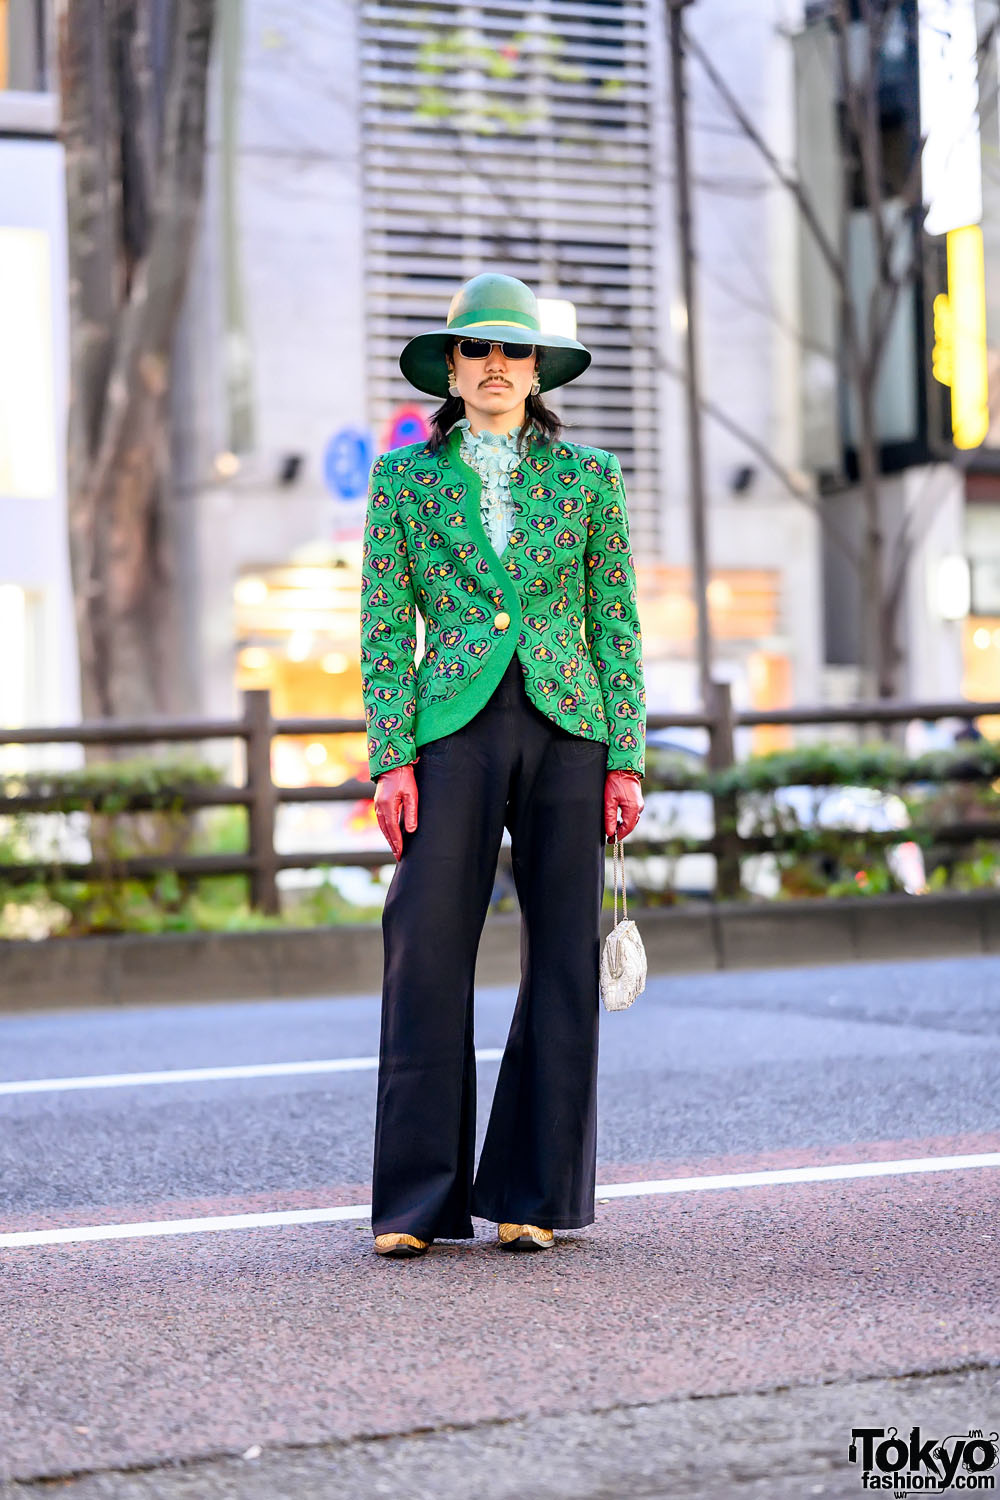 Green Vintage Harajuku Street Style w/ Wide Brim Hat, 1980s Jacket